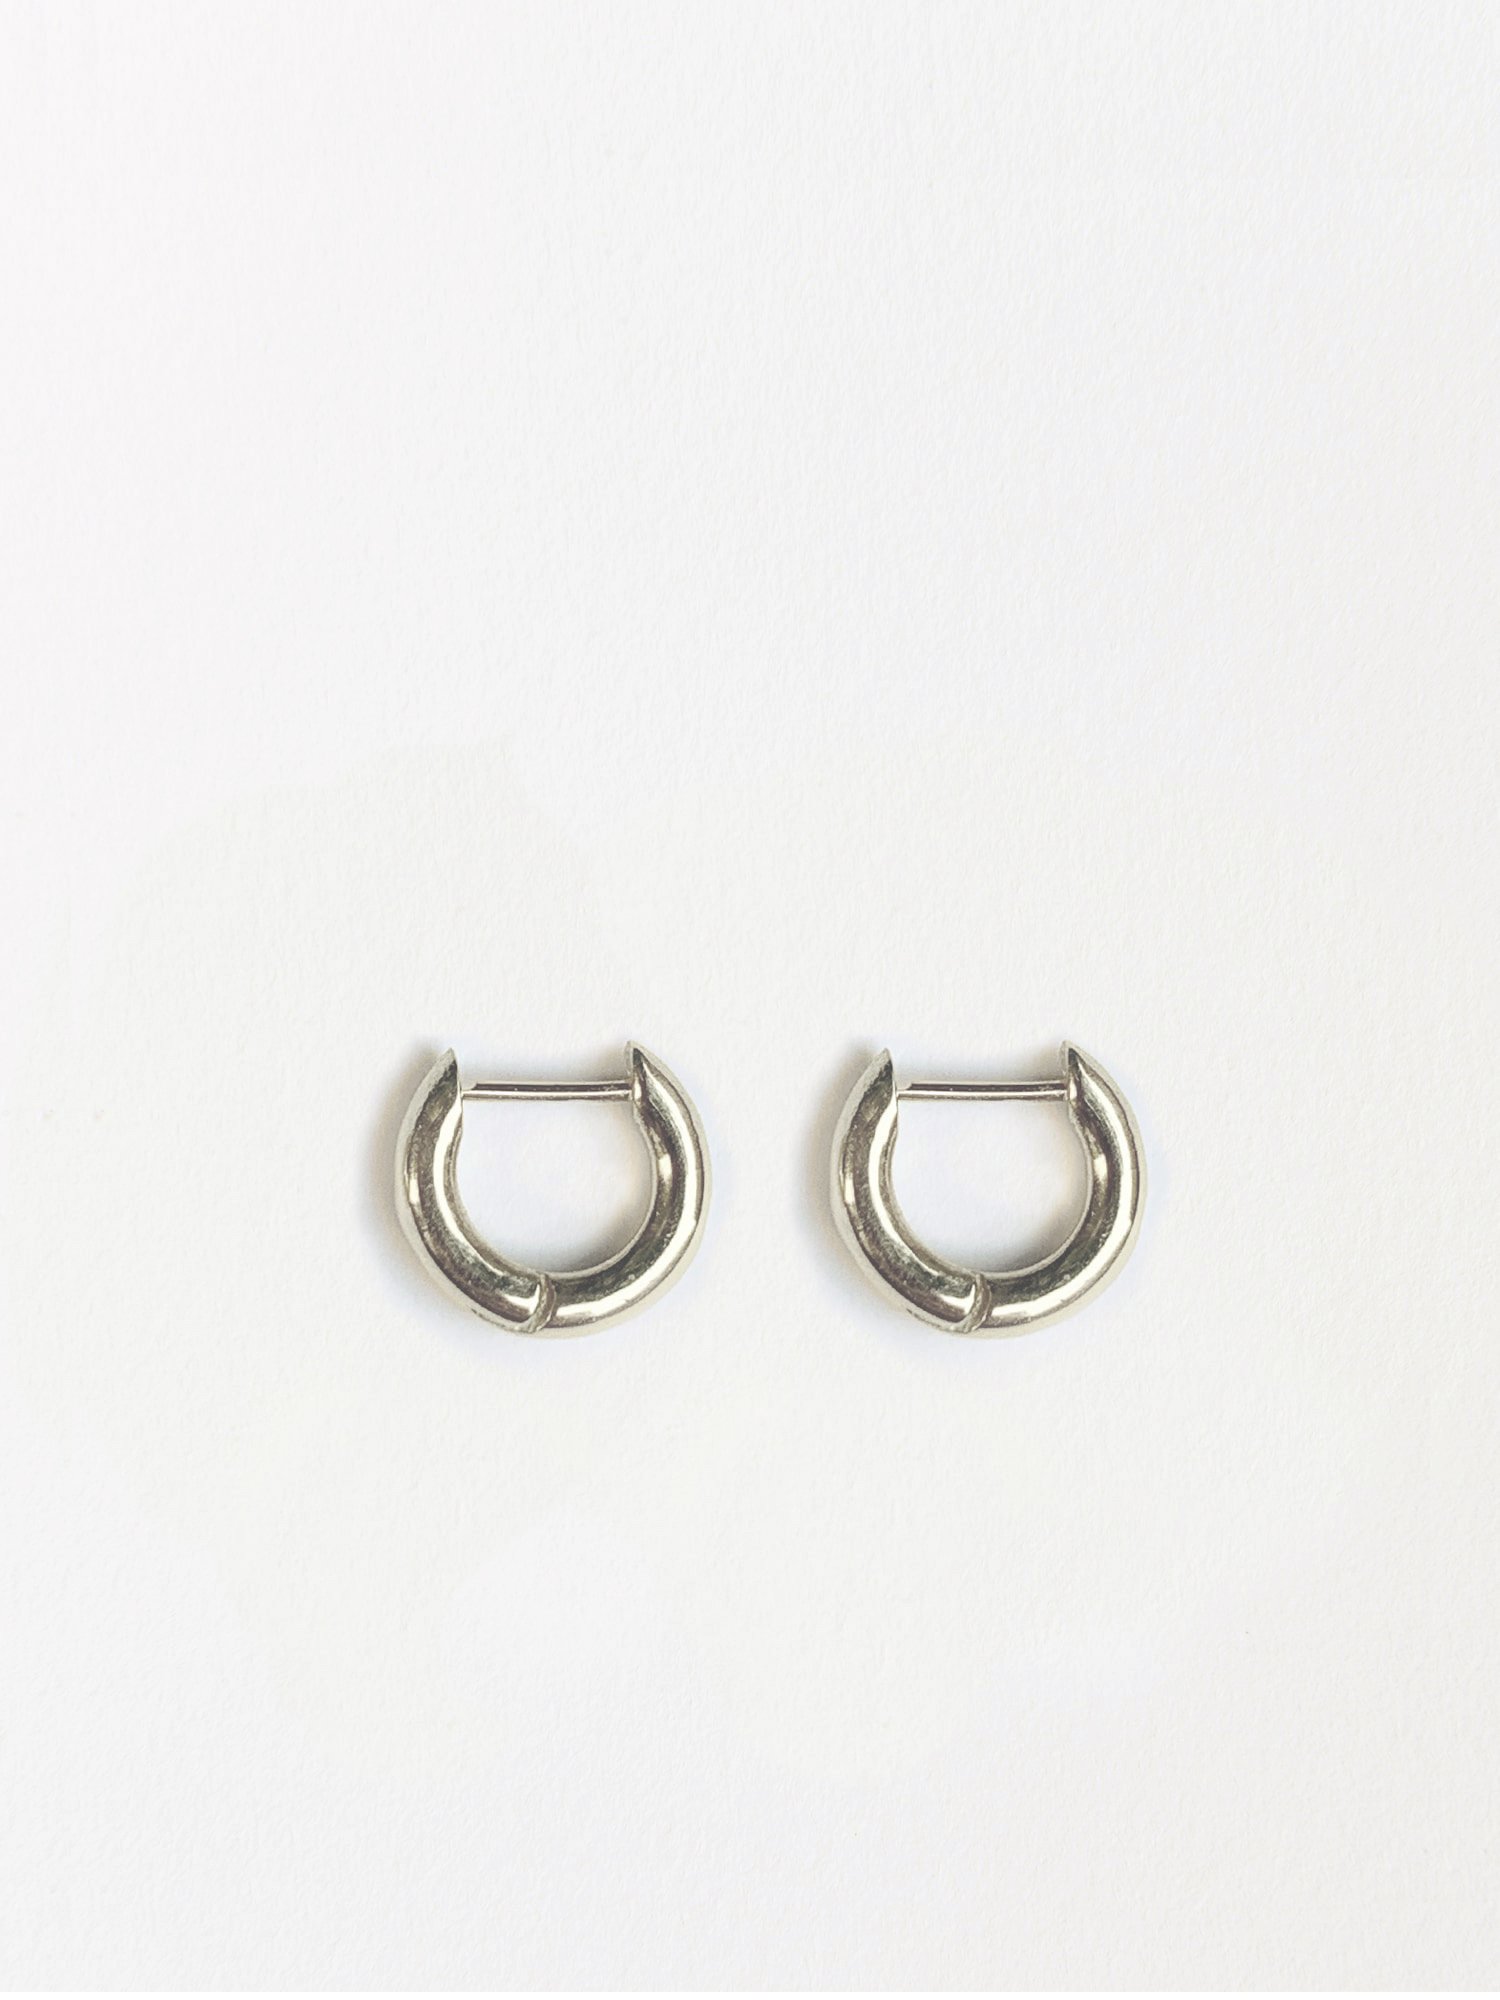 SOPHISTICATED VINTAGE / Circle earrings / K18 white gold別注

